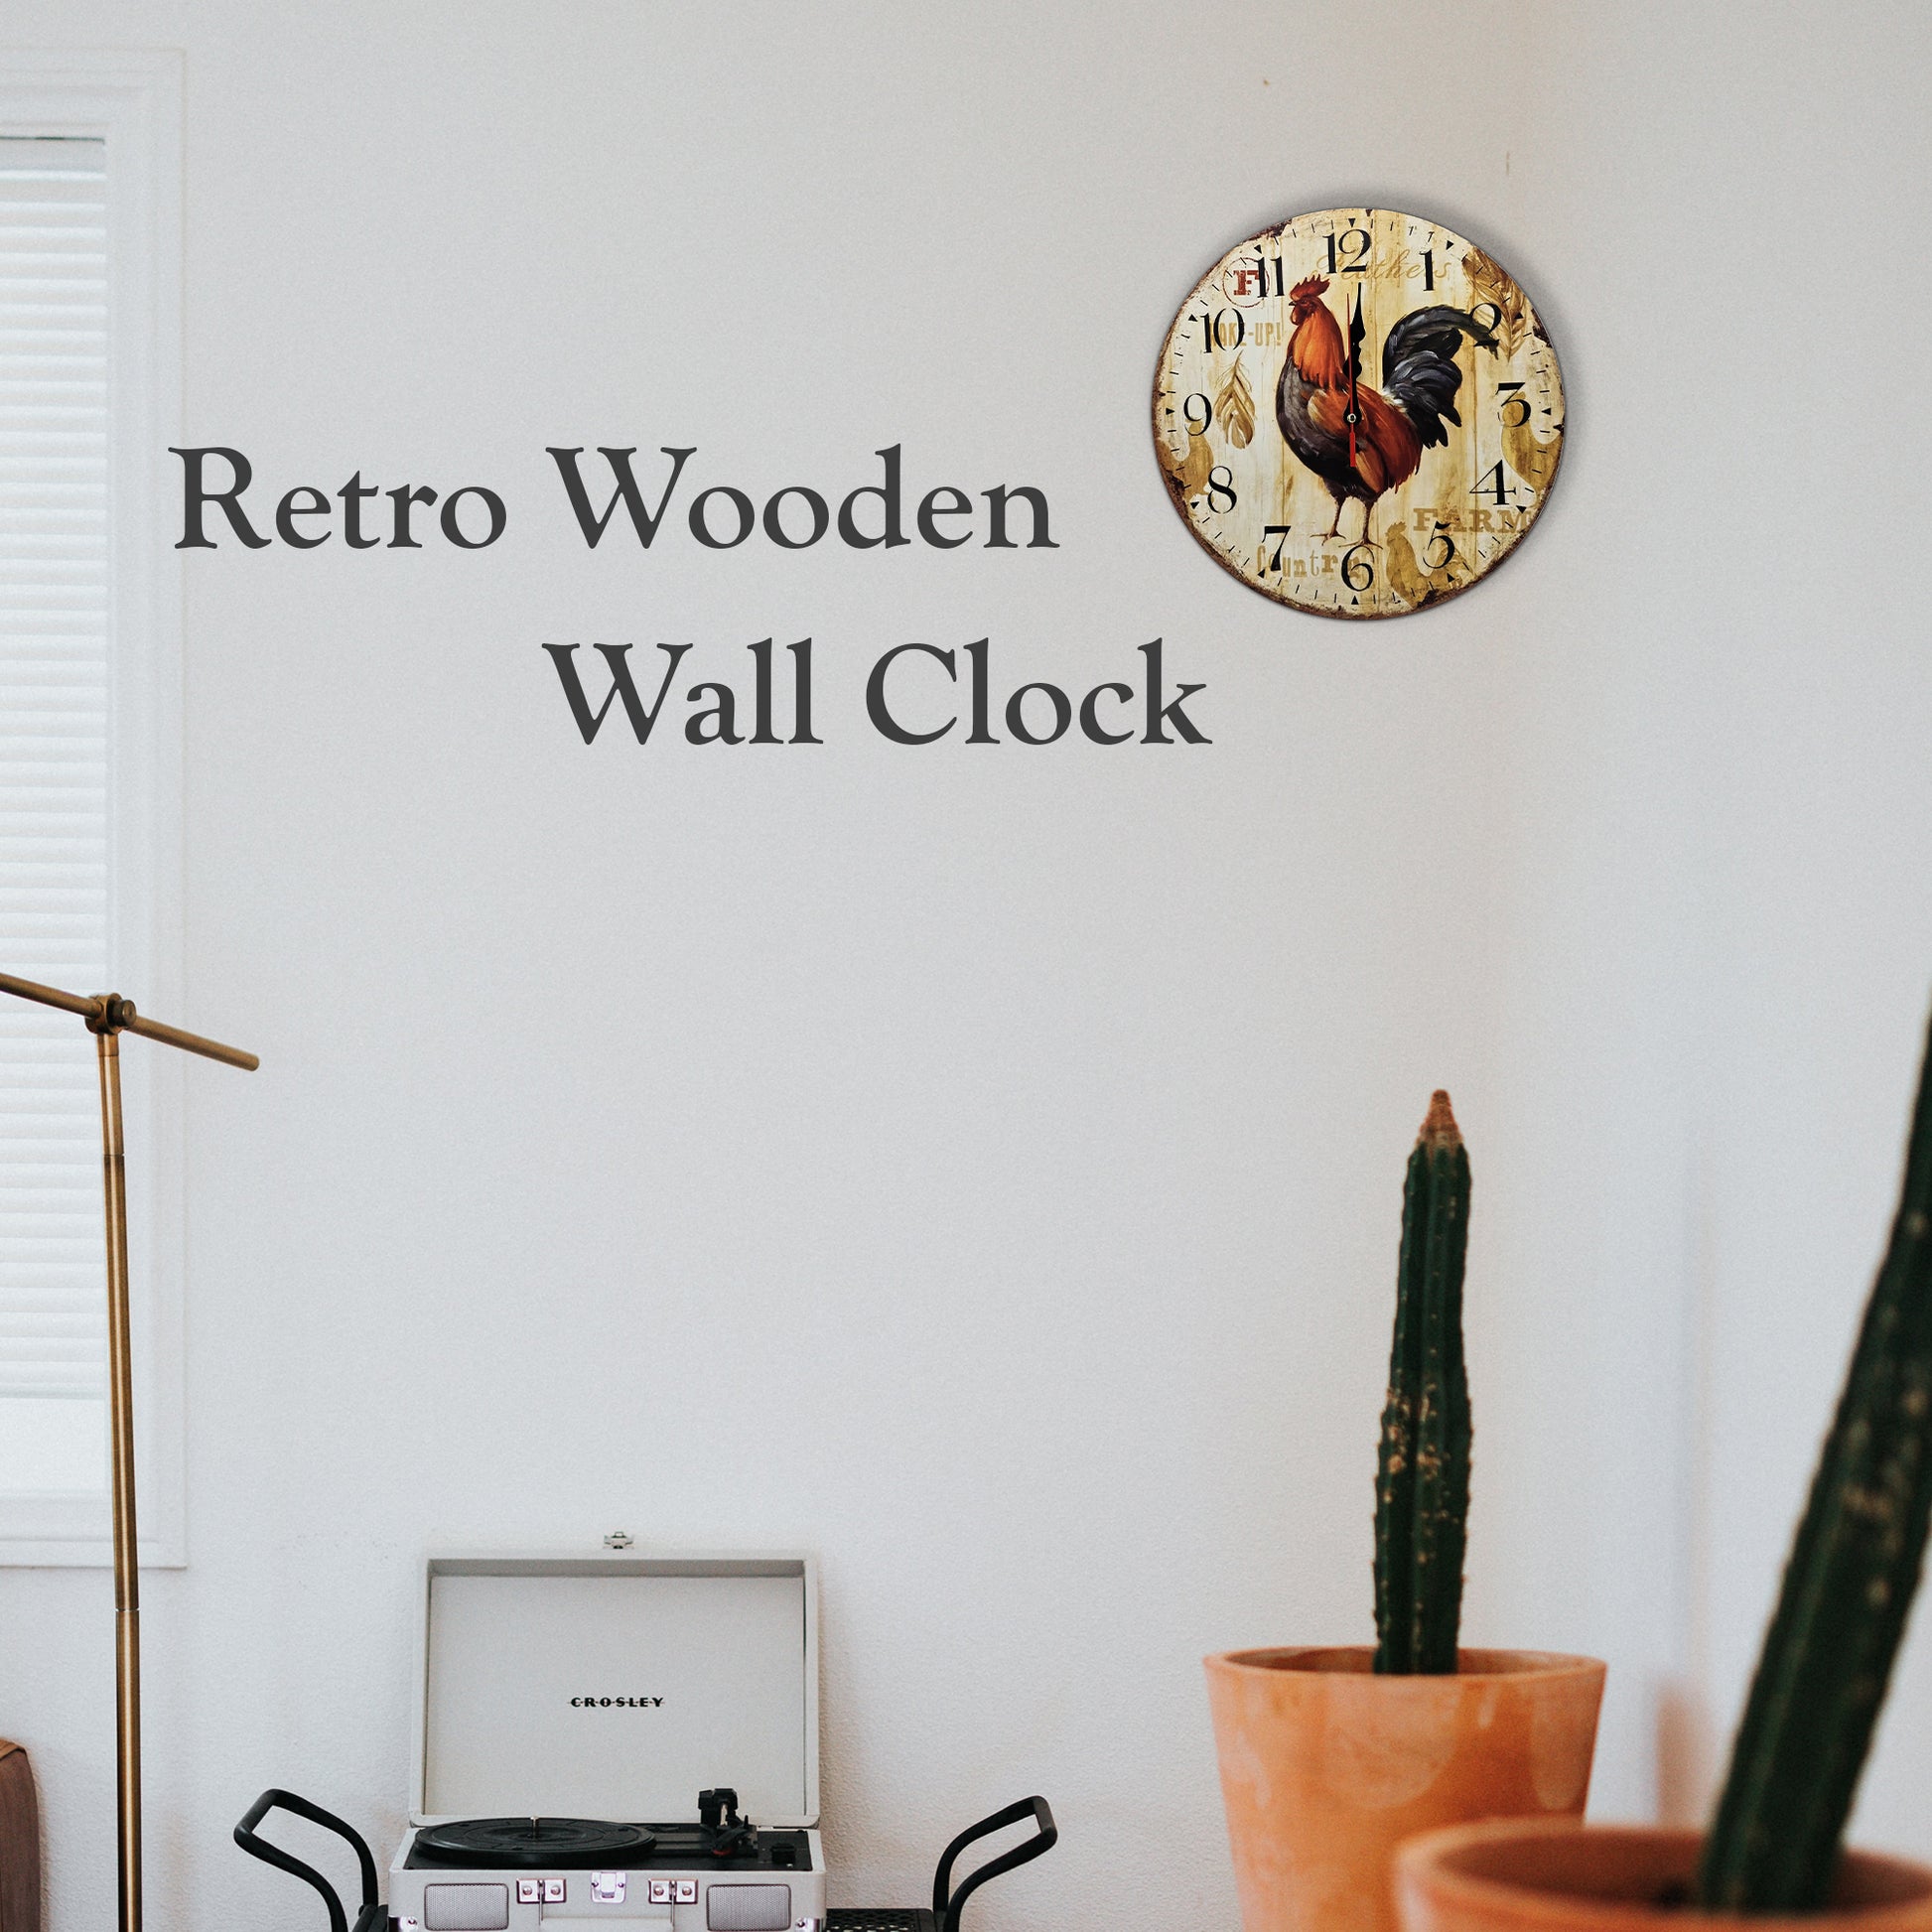 Retro wooden Wall Clock